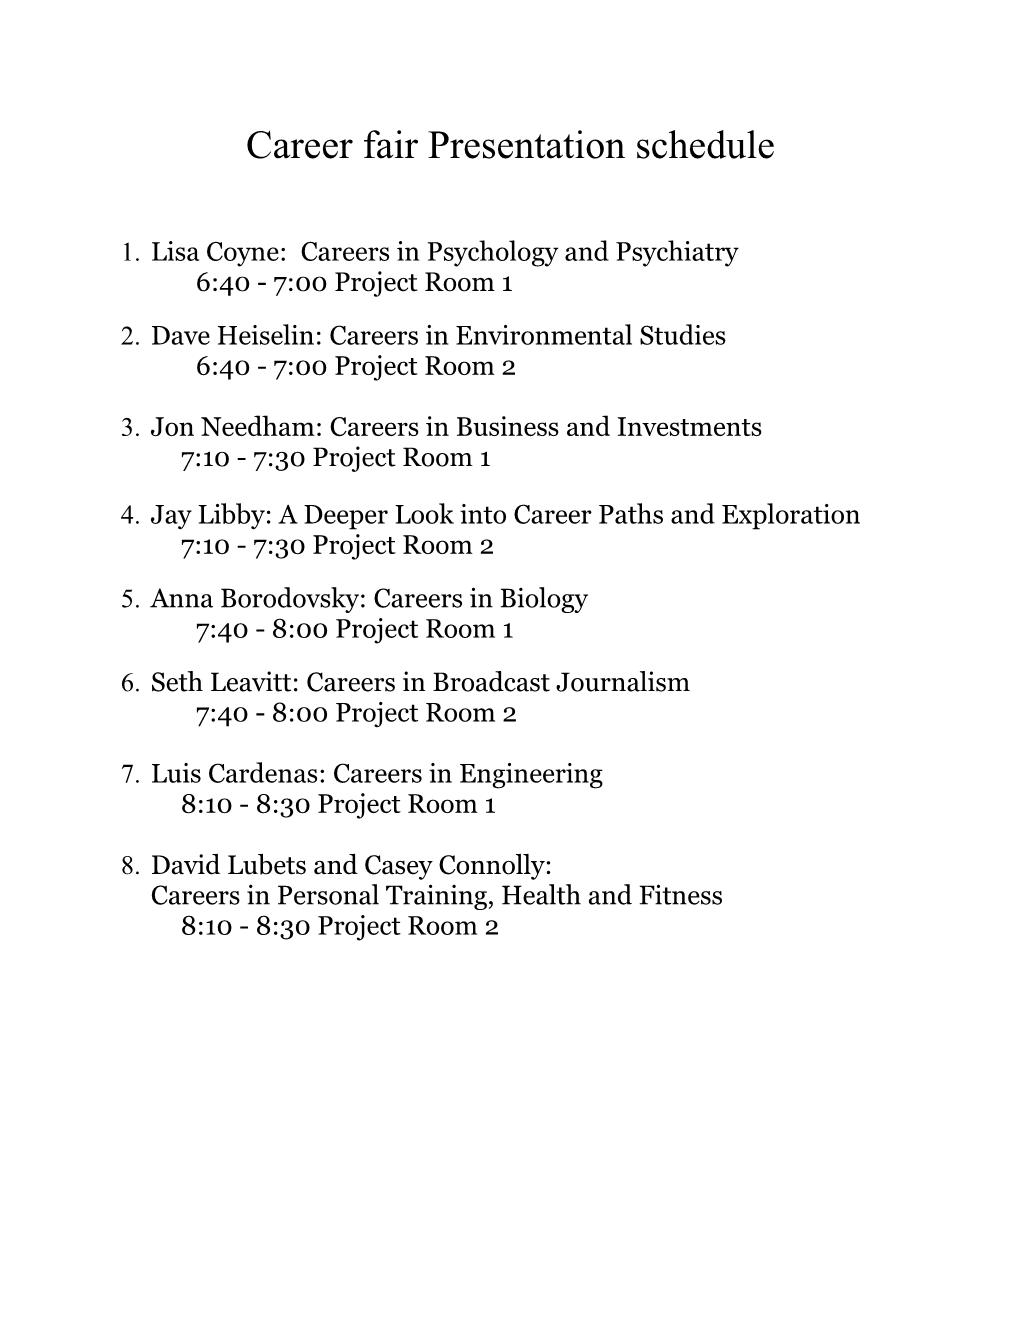 Career Fair Presentation Schedule